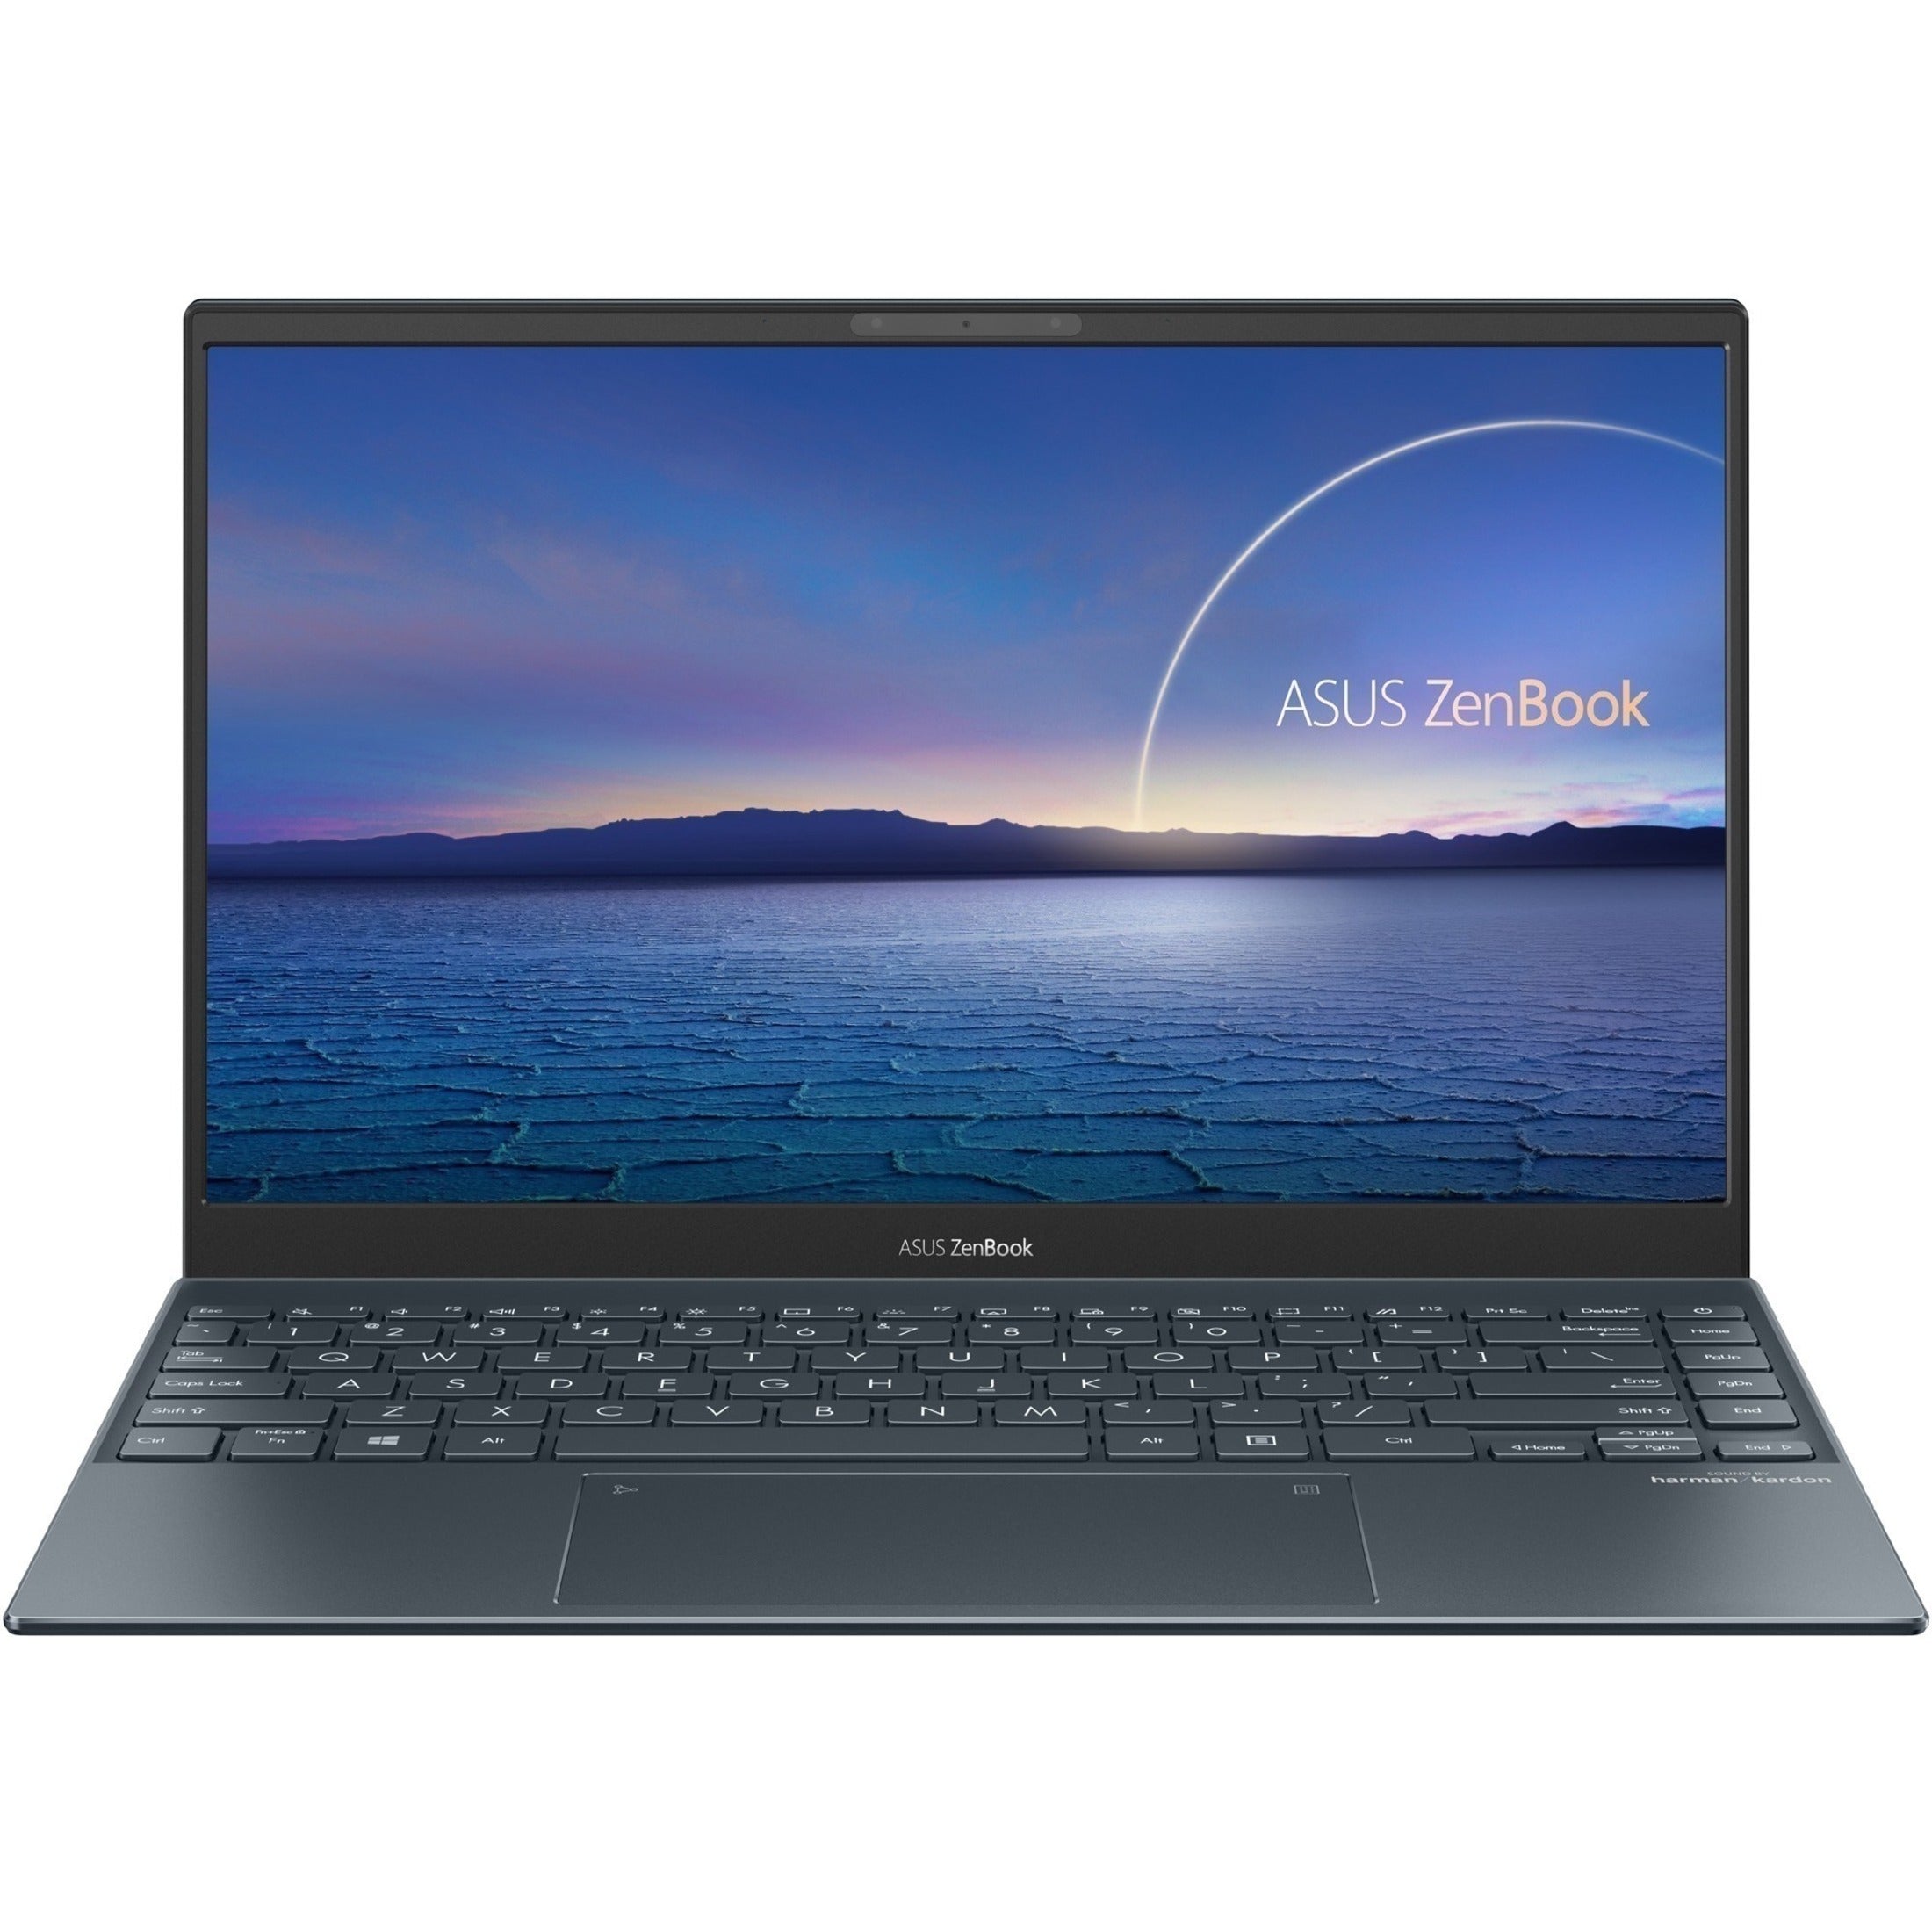 Asus UX325EA-DH51 ZenBook 13 Notebook, 13.3 Full HD, Intel Core i5, 8GB RAM, 256GB SSD, Pine Gray